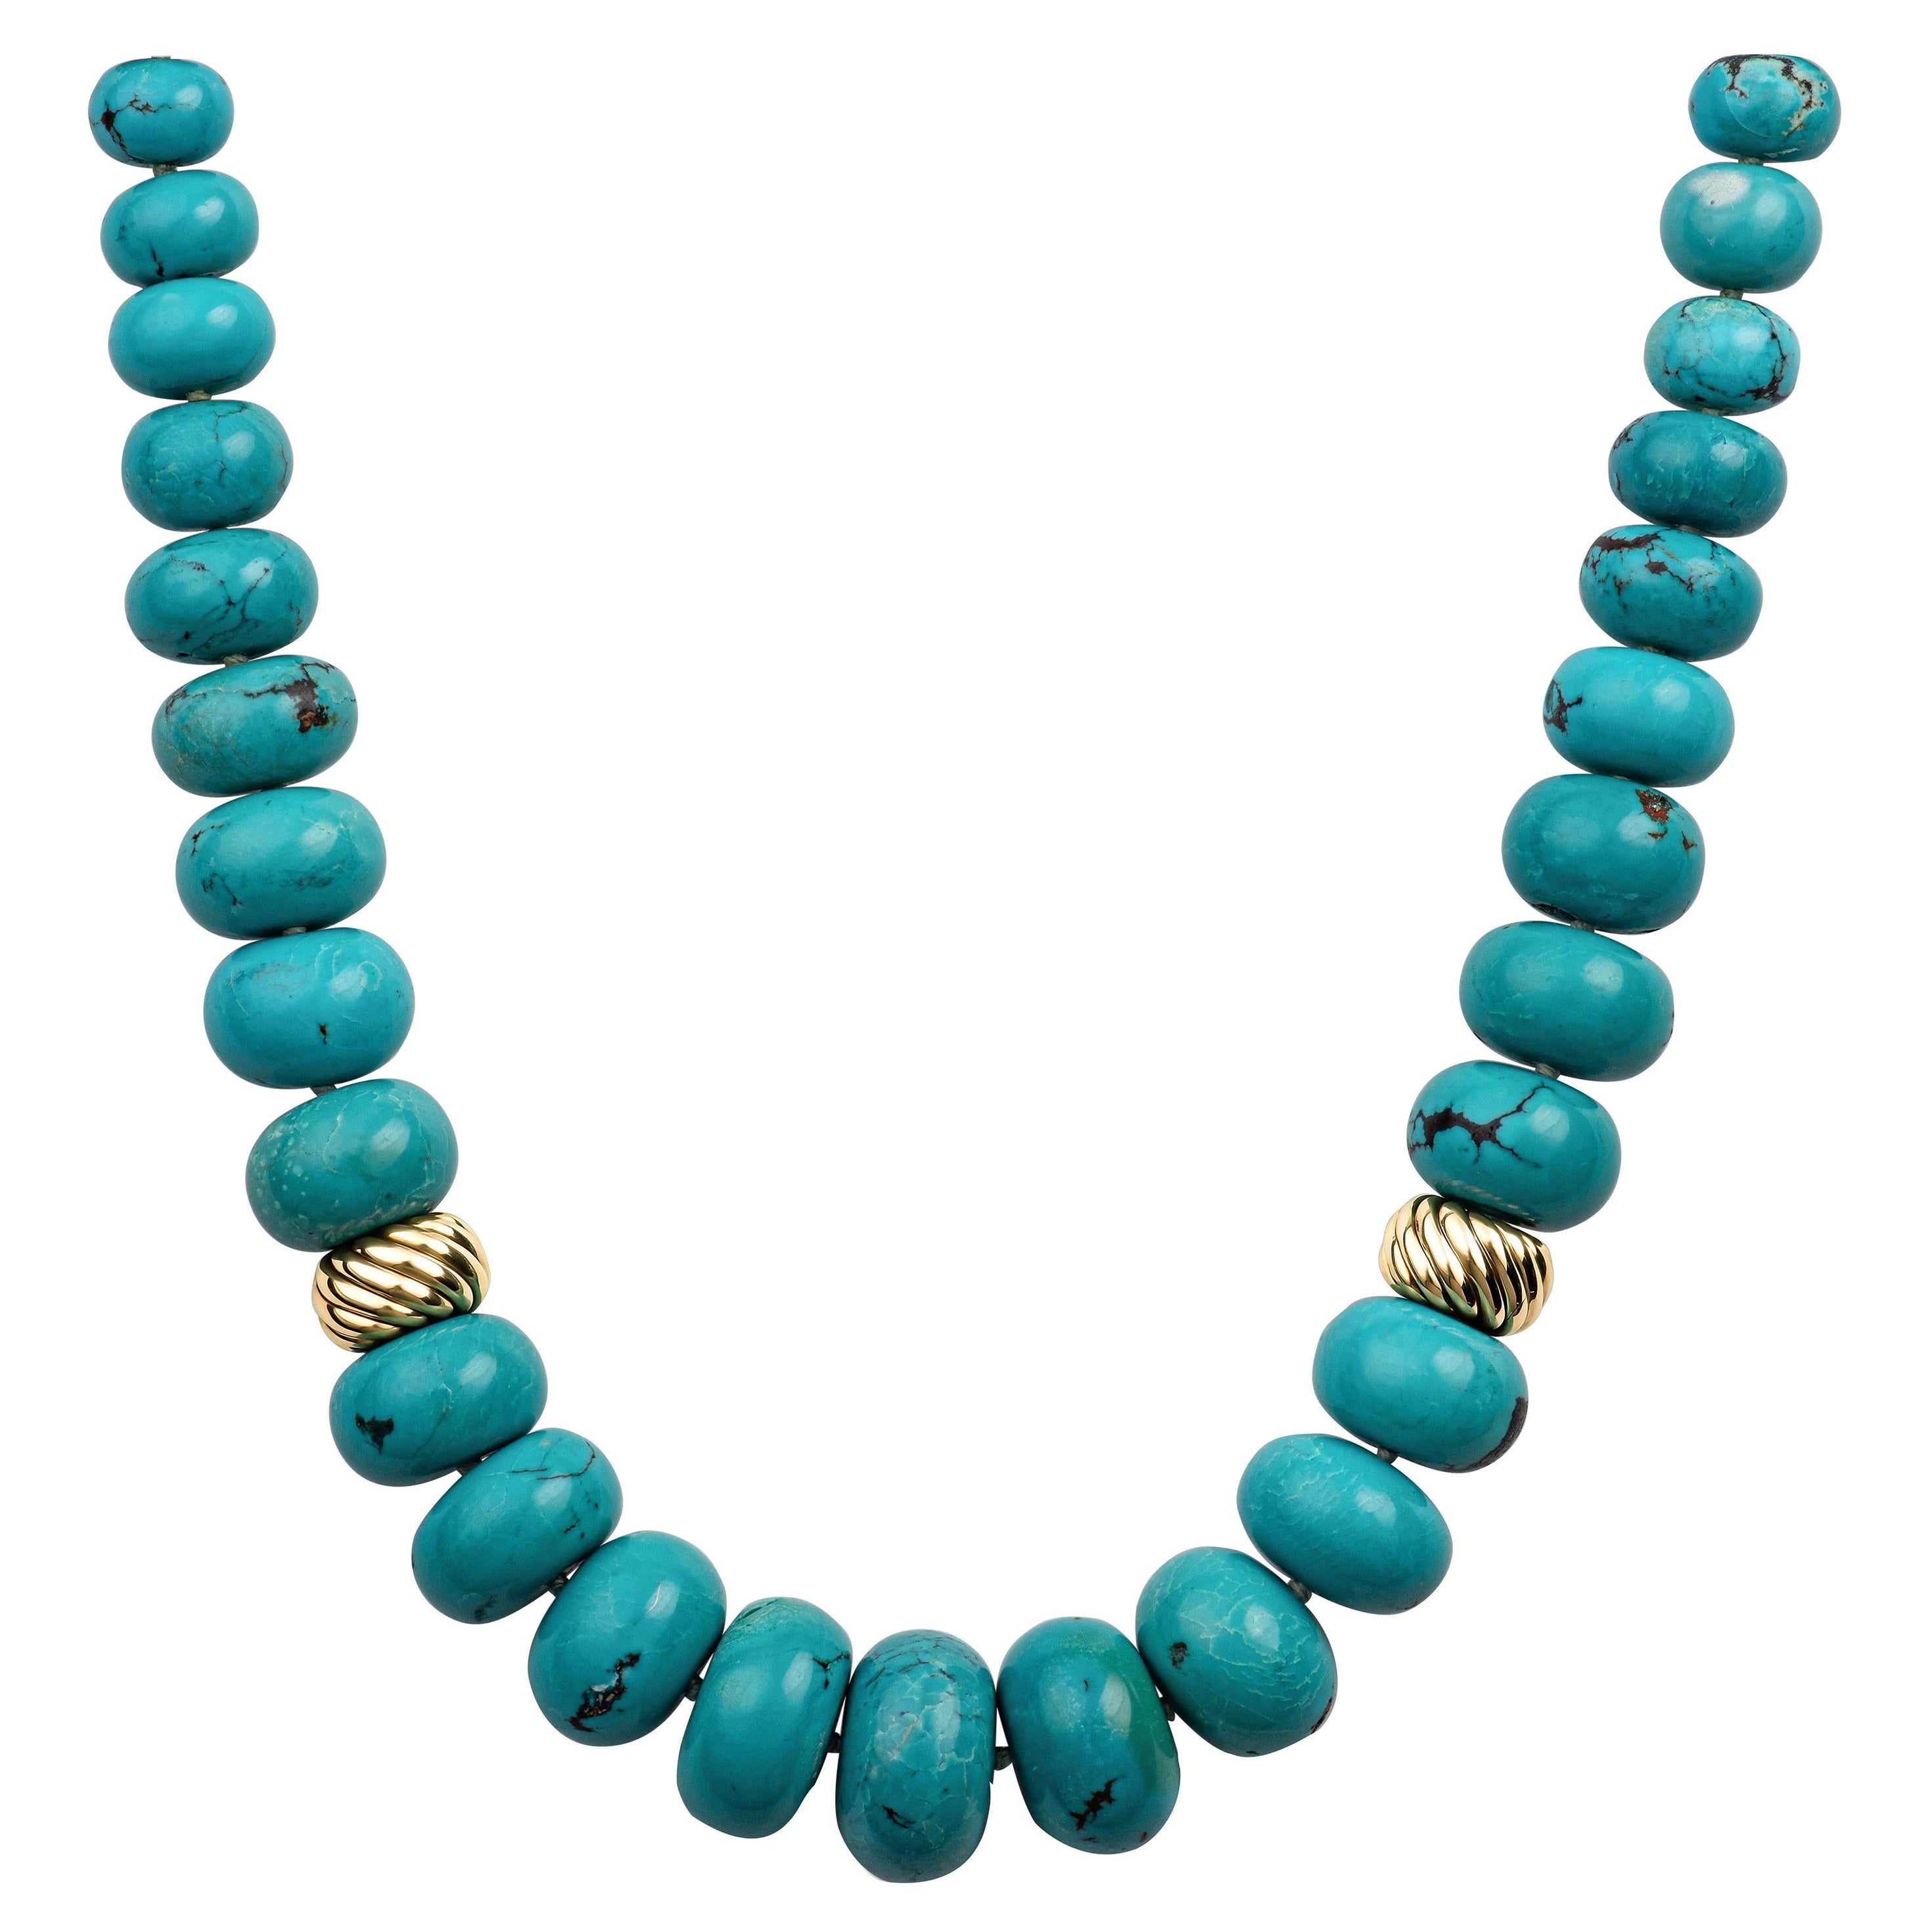 David Yurman Turquoise Bead Necklace with 18 Karat Yellow Gold